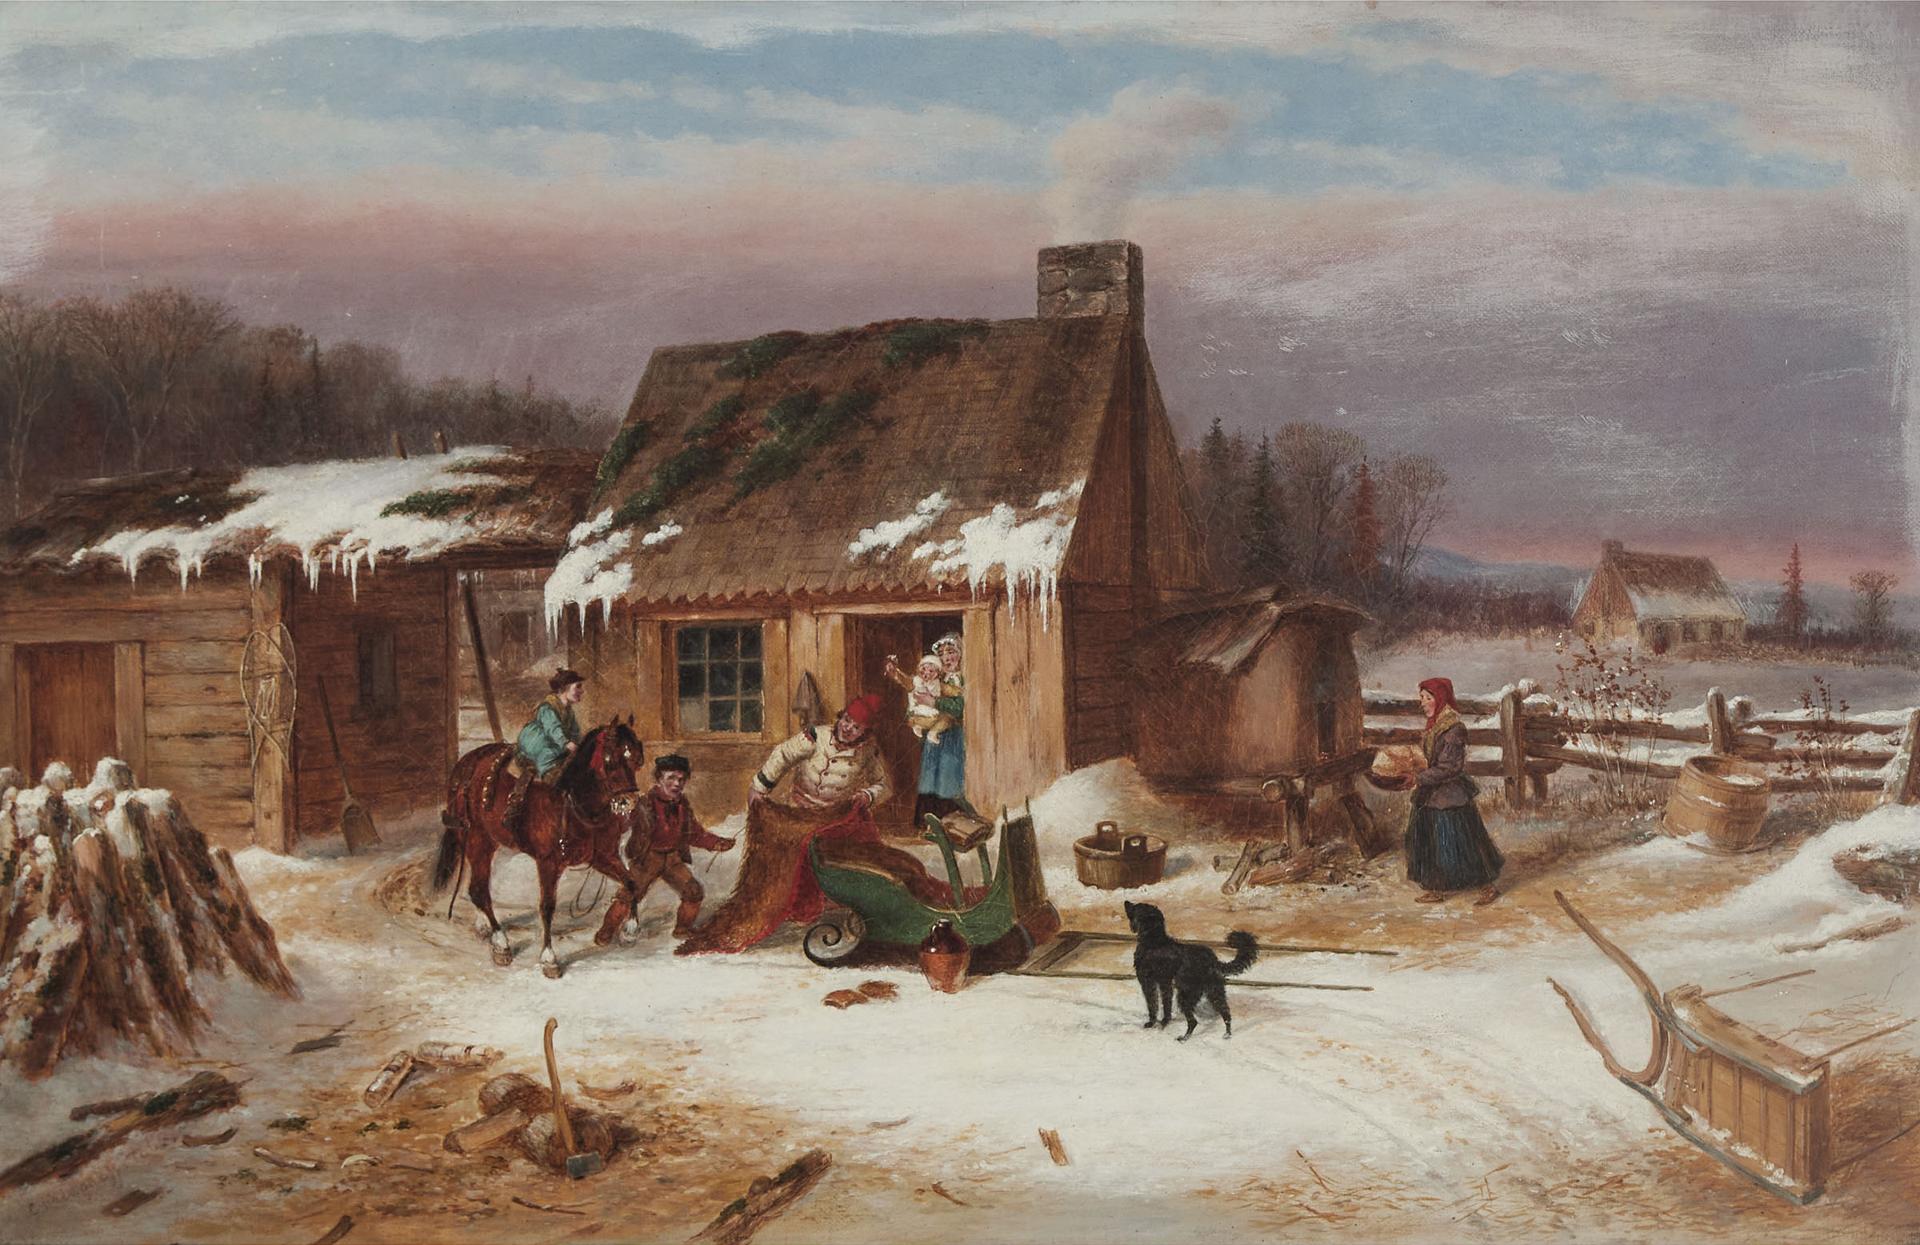 Cornelius David Krieghoff (1815-1872) - A Trip To Town, 1865